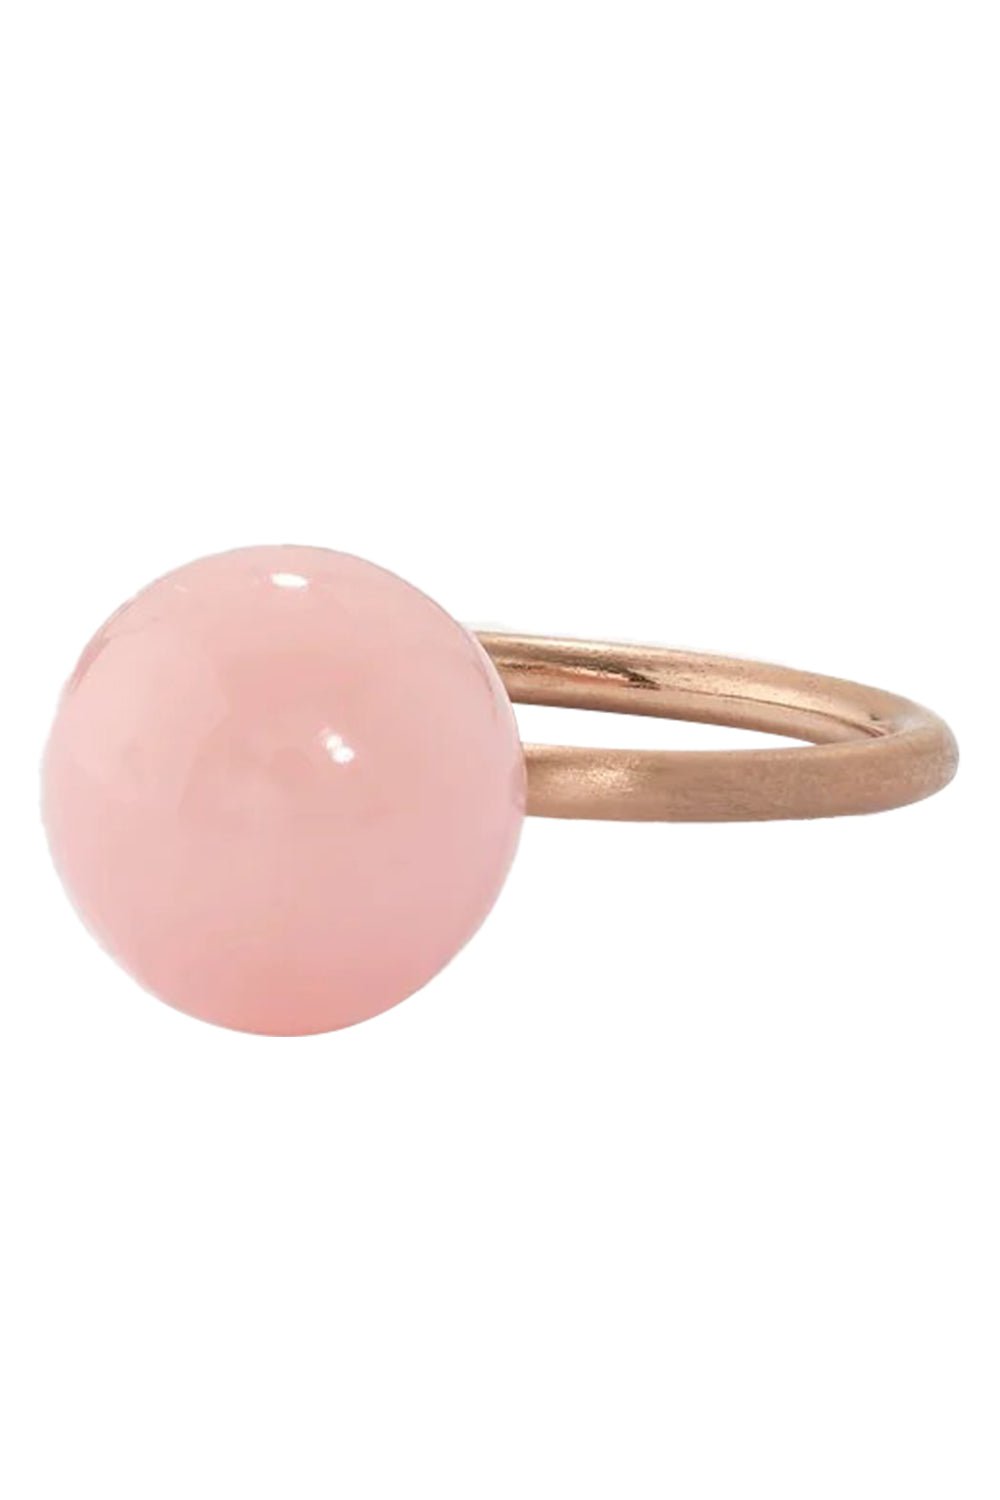 IRENE NEUWIRTH JEWELRY-Medium Gumball Pink Opal Ring-ROSE GOLD